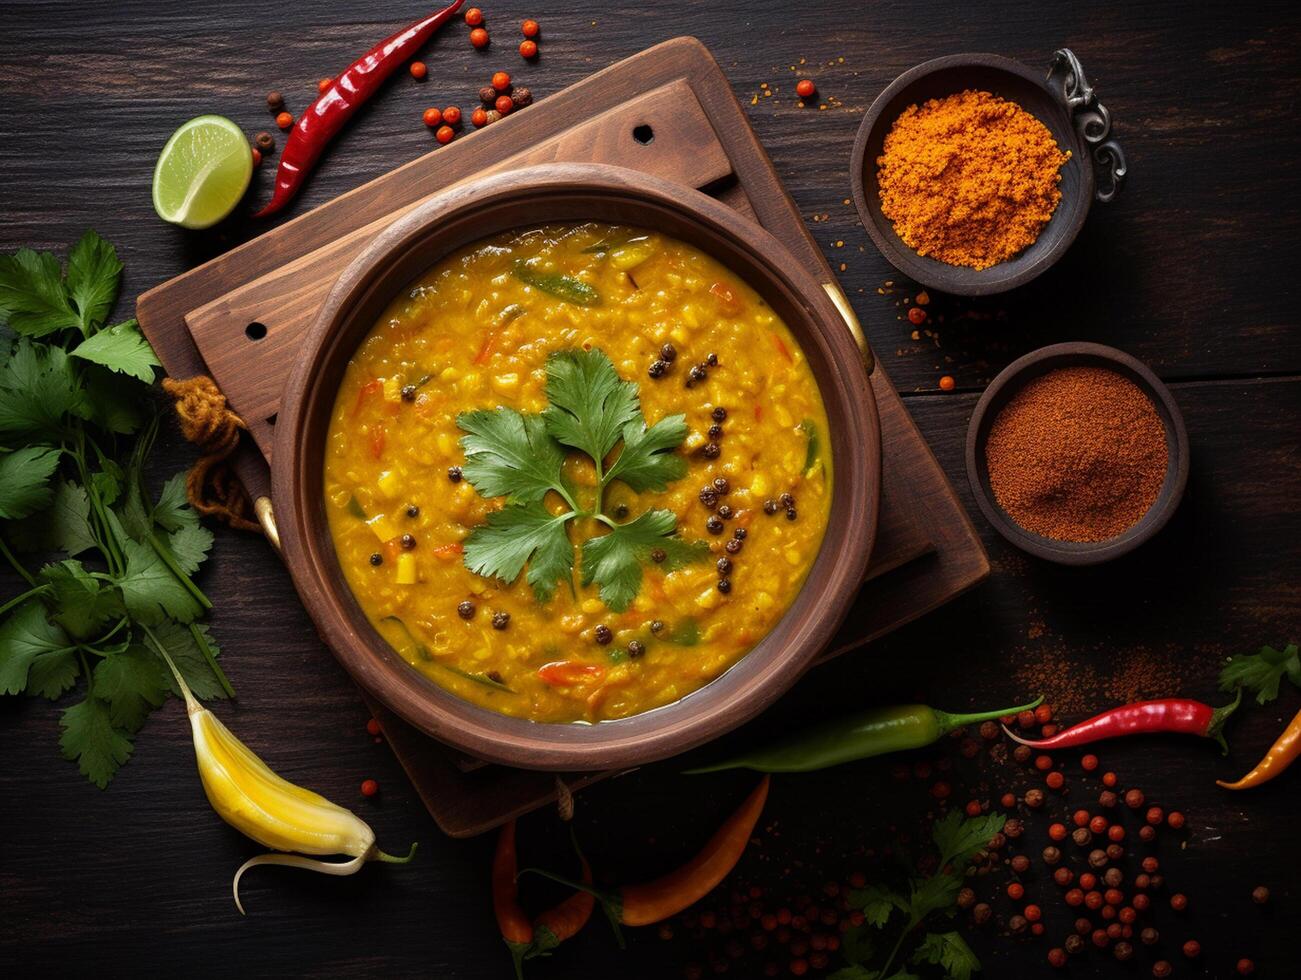 ai gerado tradicional indiano sopa lentilhas. indiano dhal picante Curry dentro tigela, especiarias, ervas, rústico Preto de madeira mesa foto